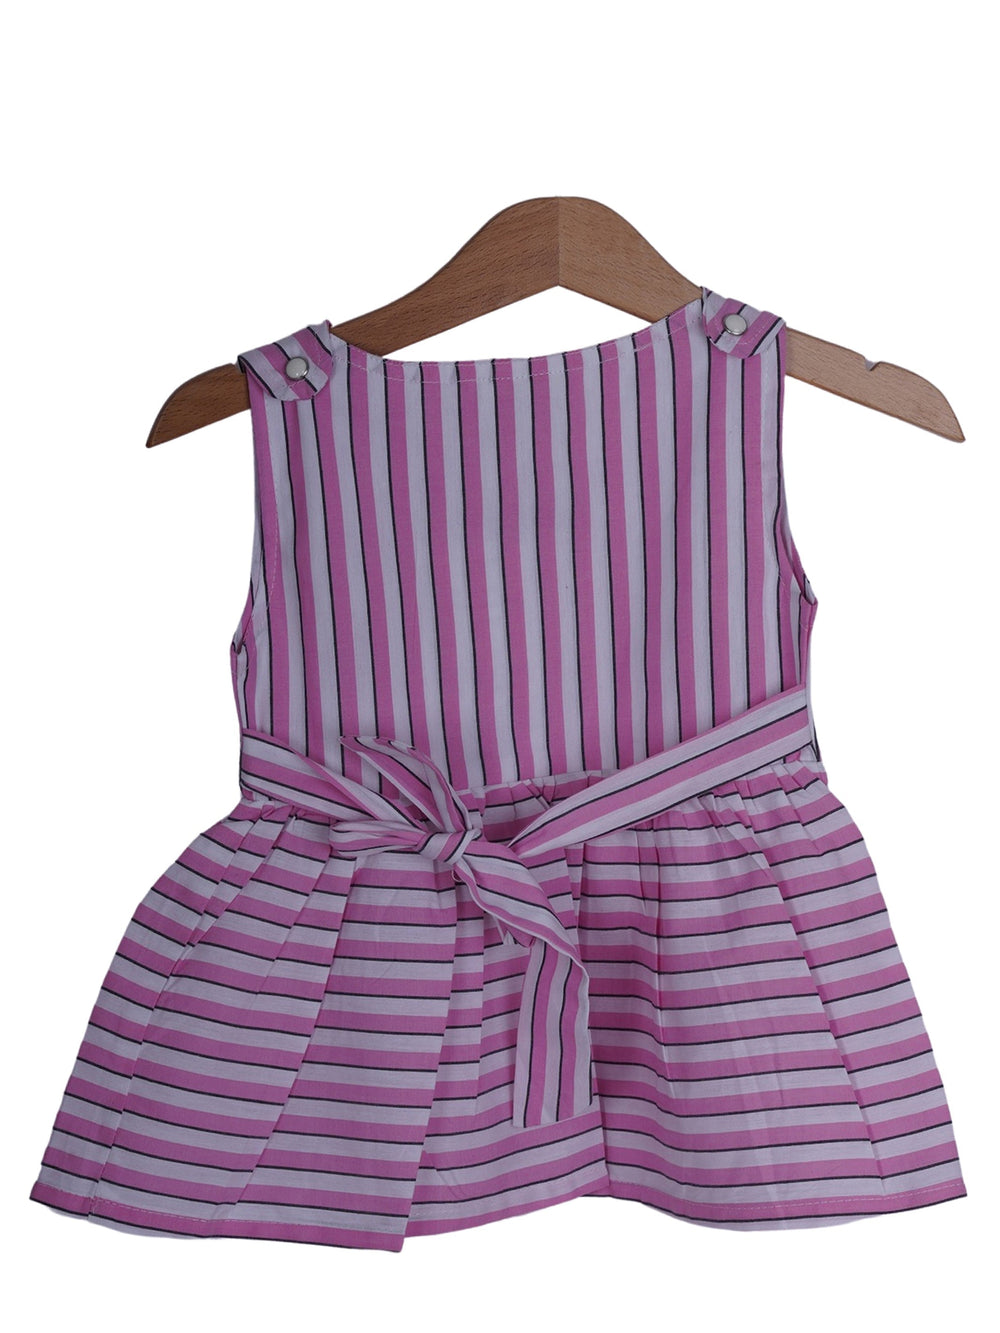 The Nesavu Baby Frock / Jhabla Pink Striped Cotton Wear For Little Girls psr silks Nesavu